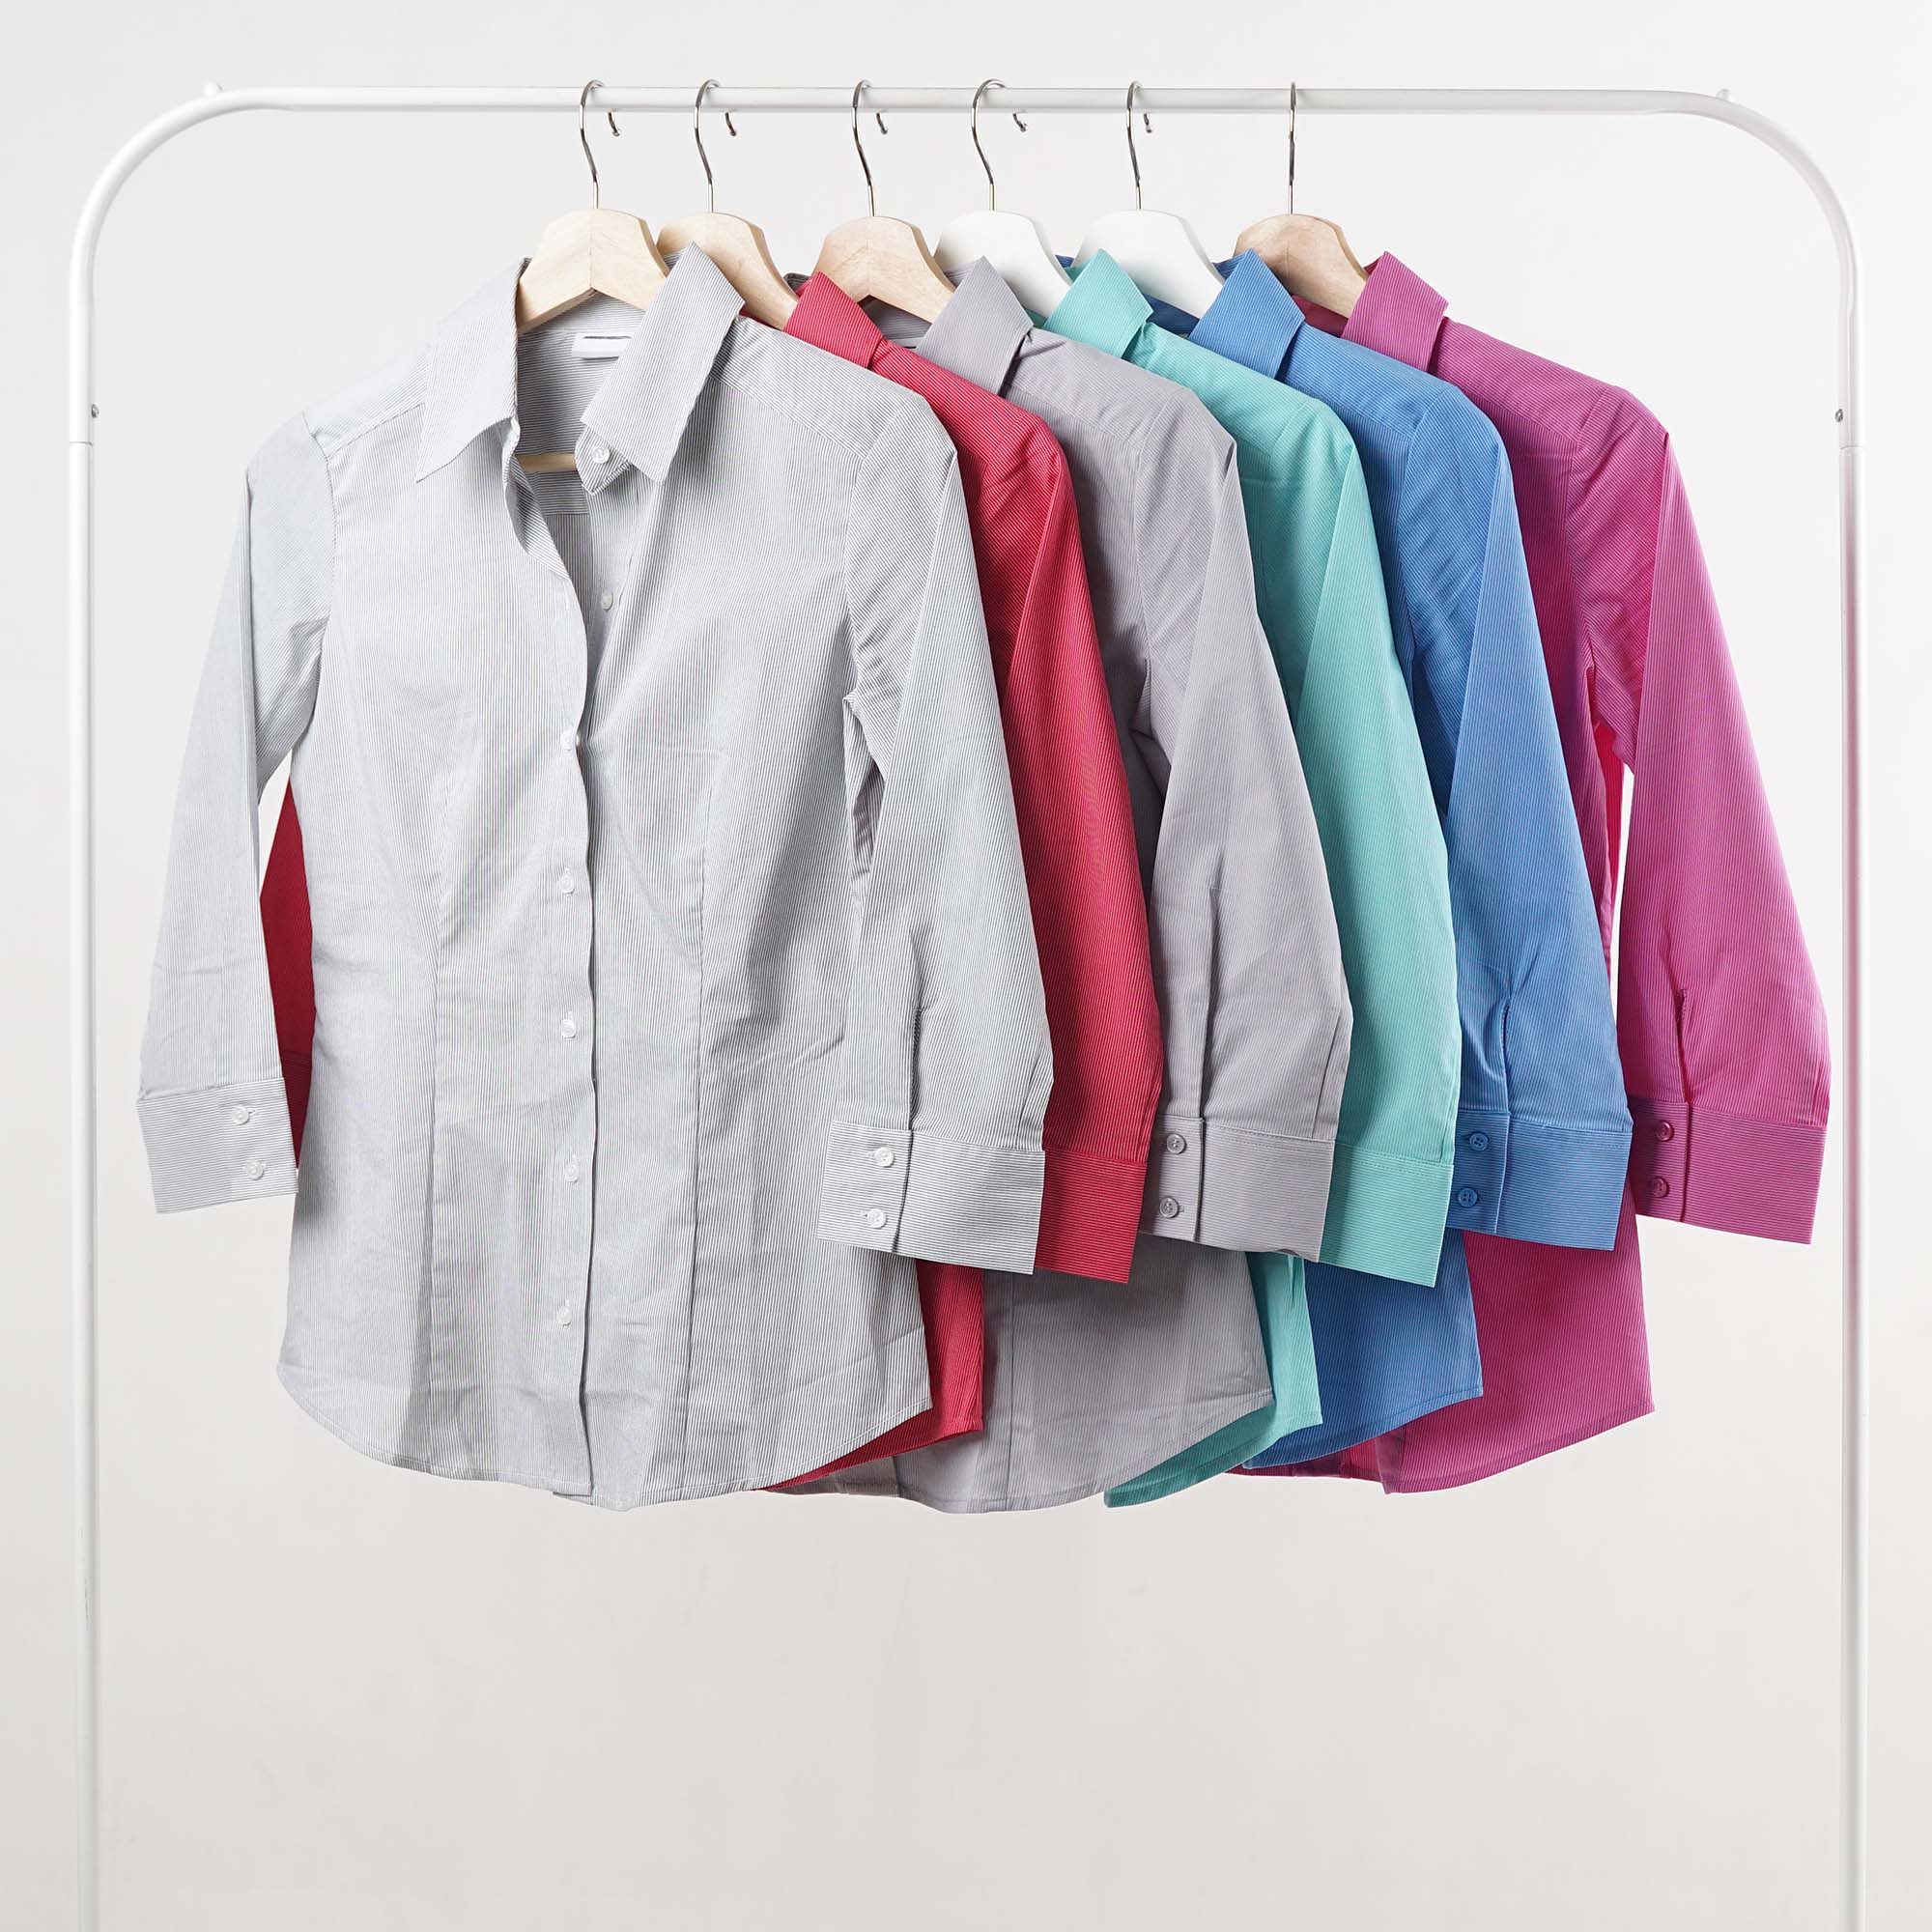 Kemeja wanita - Small stripe button blouse (CG-NYC 08)